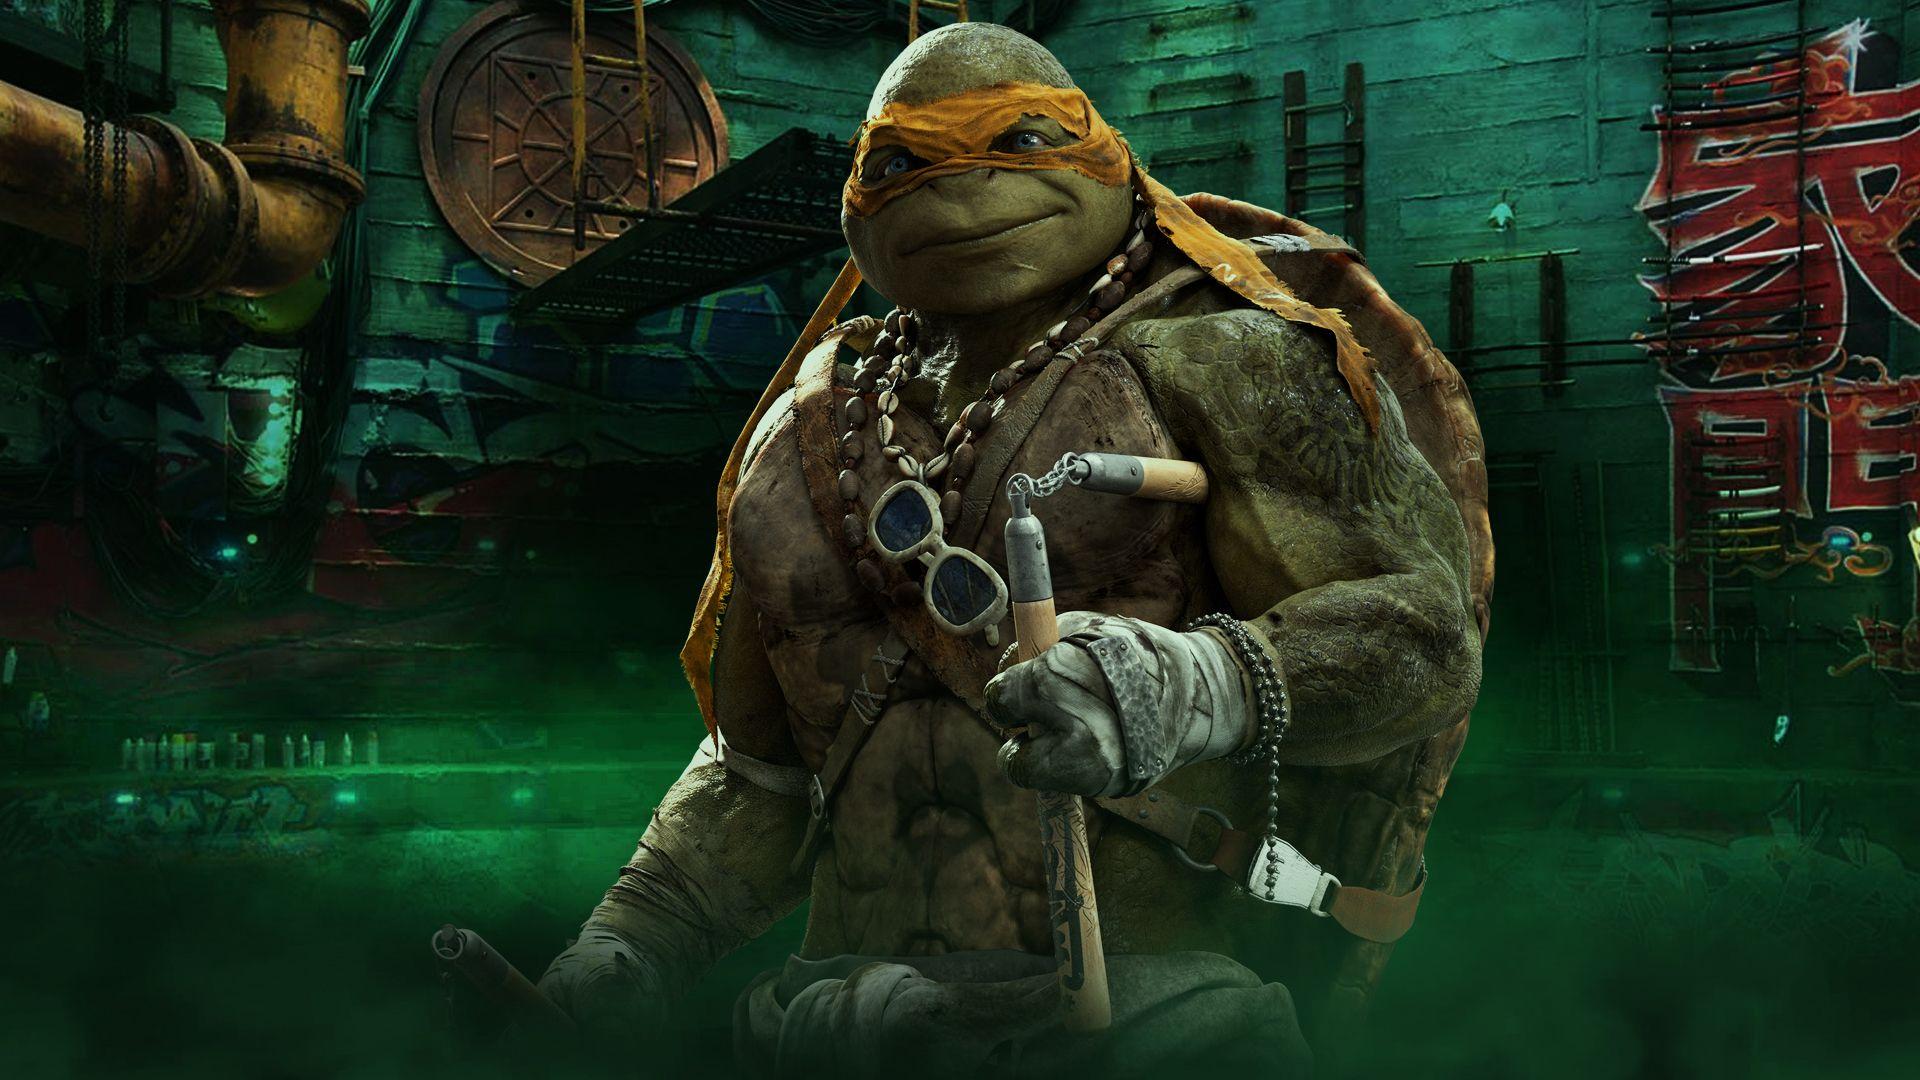 Desktop Ninja Turtles HD Wallpaper Free Download 001